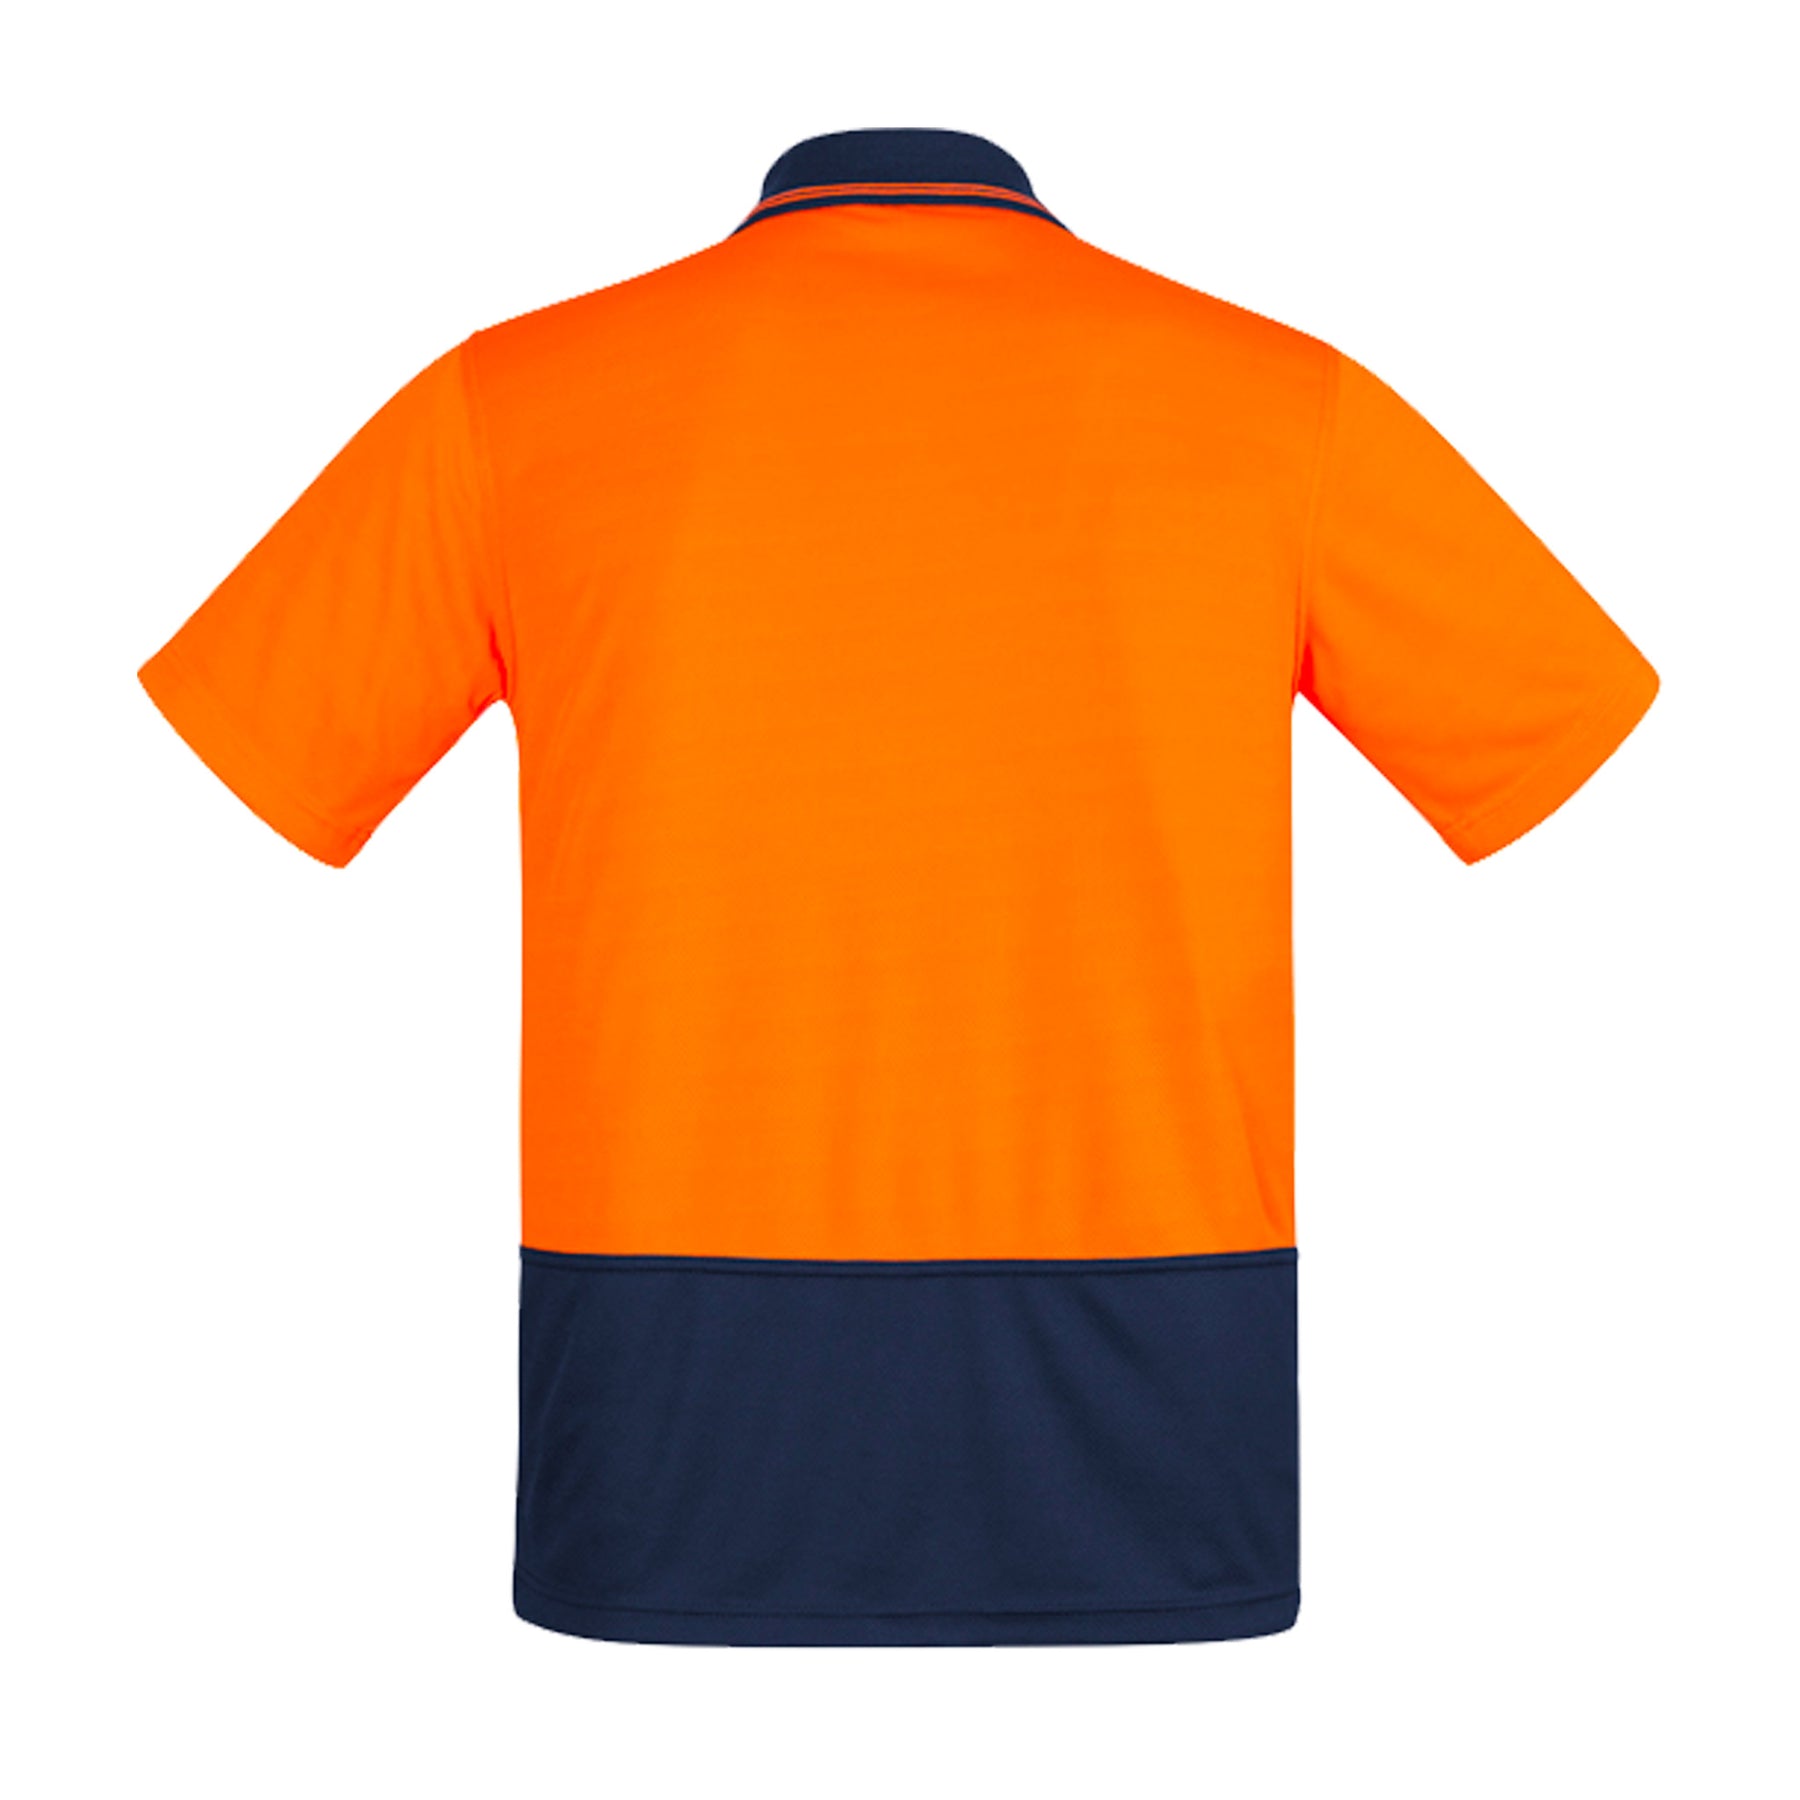 comfort back short sleeve polo in orange navy